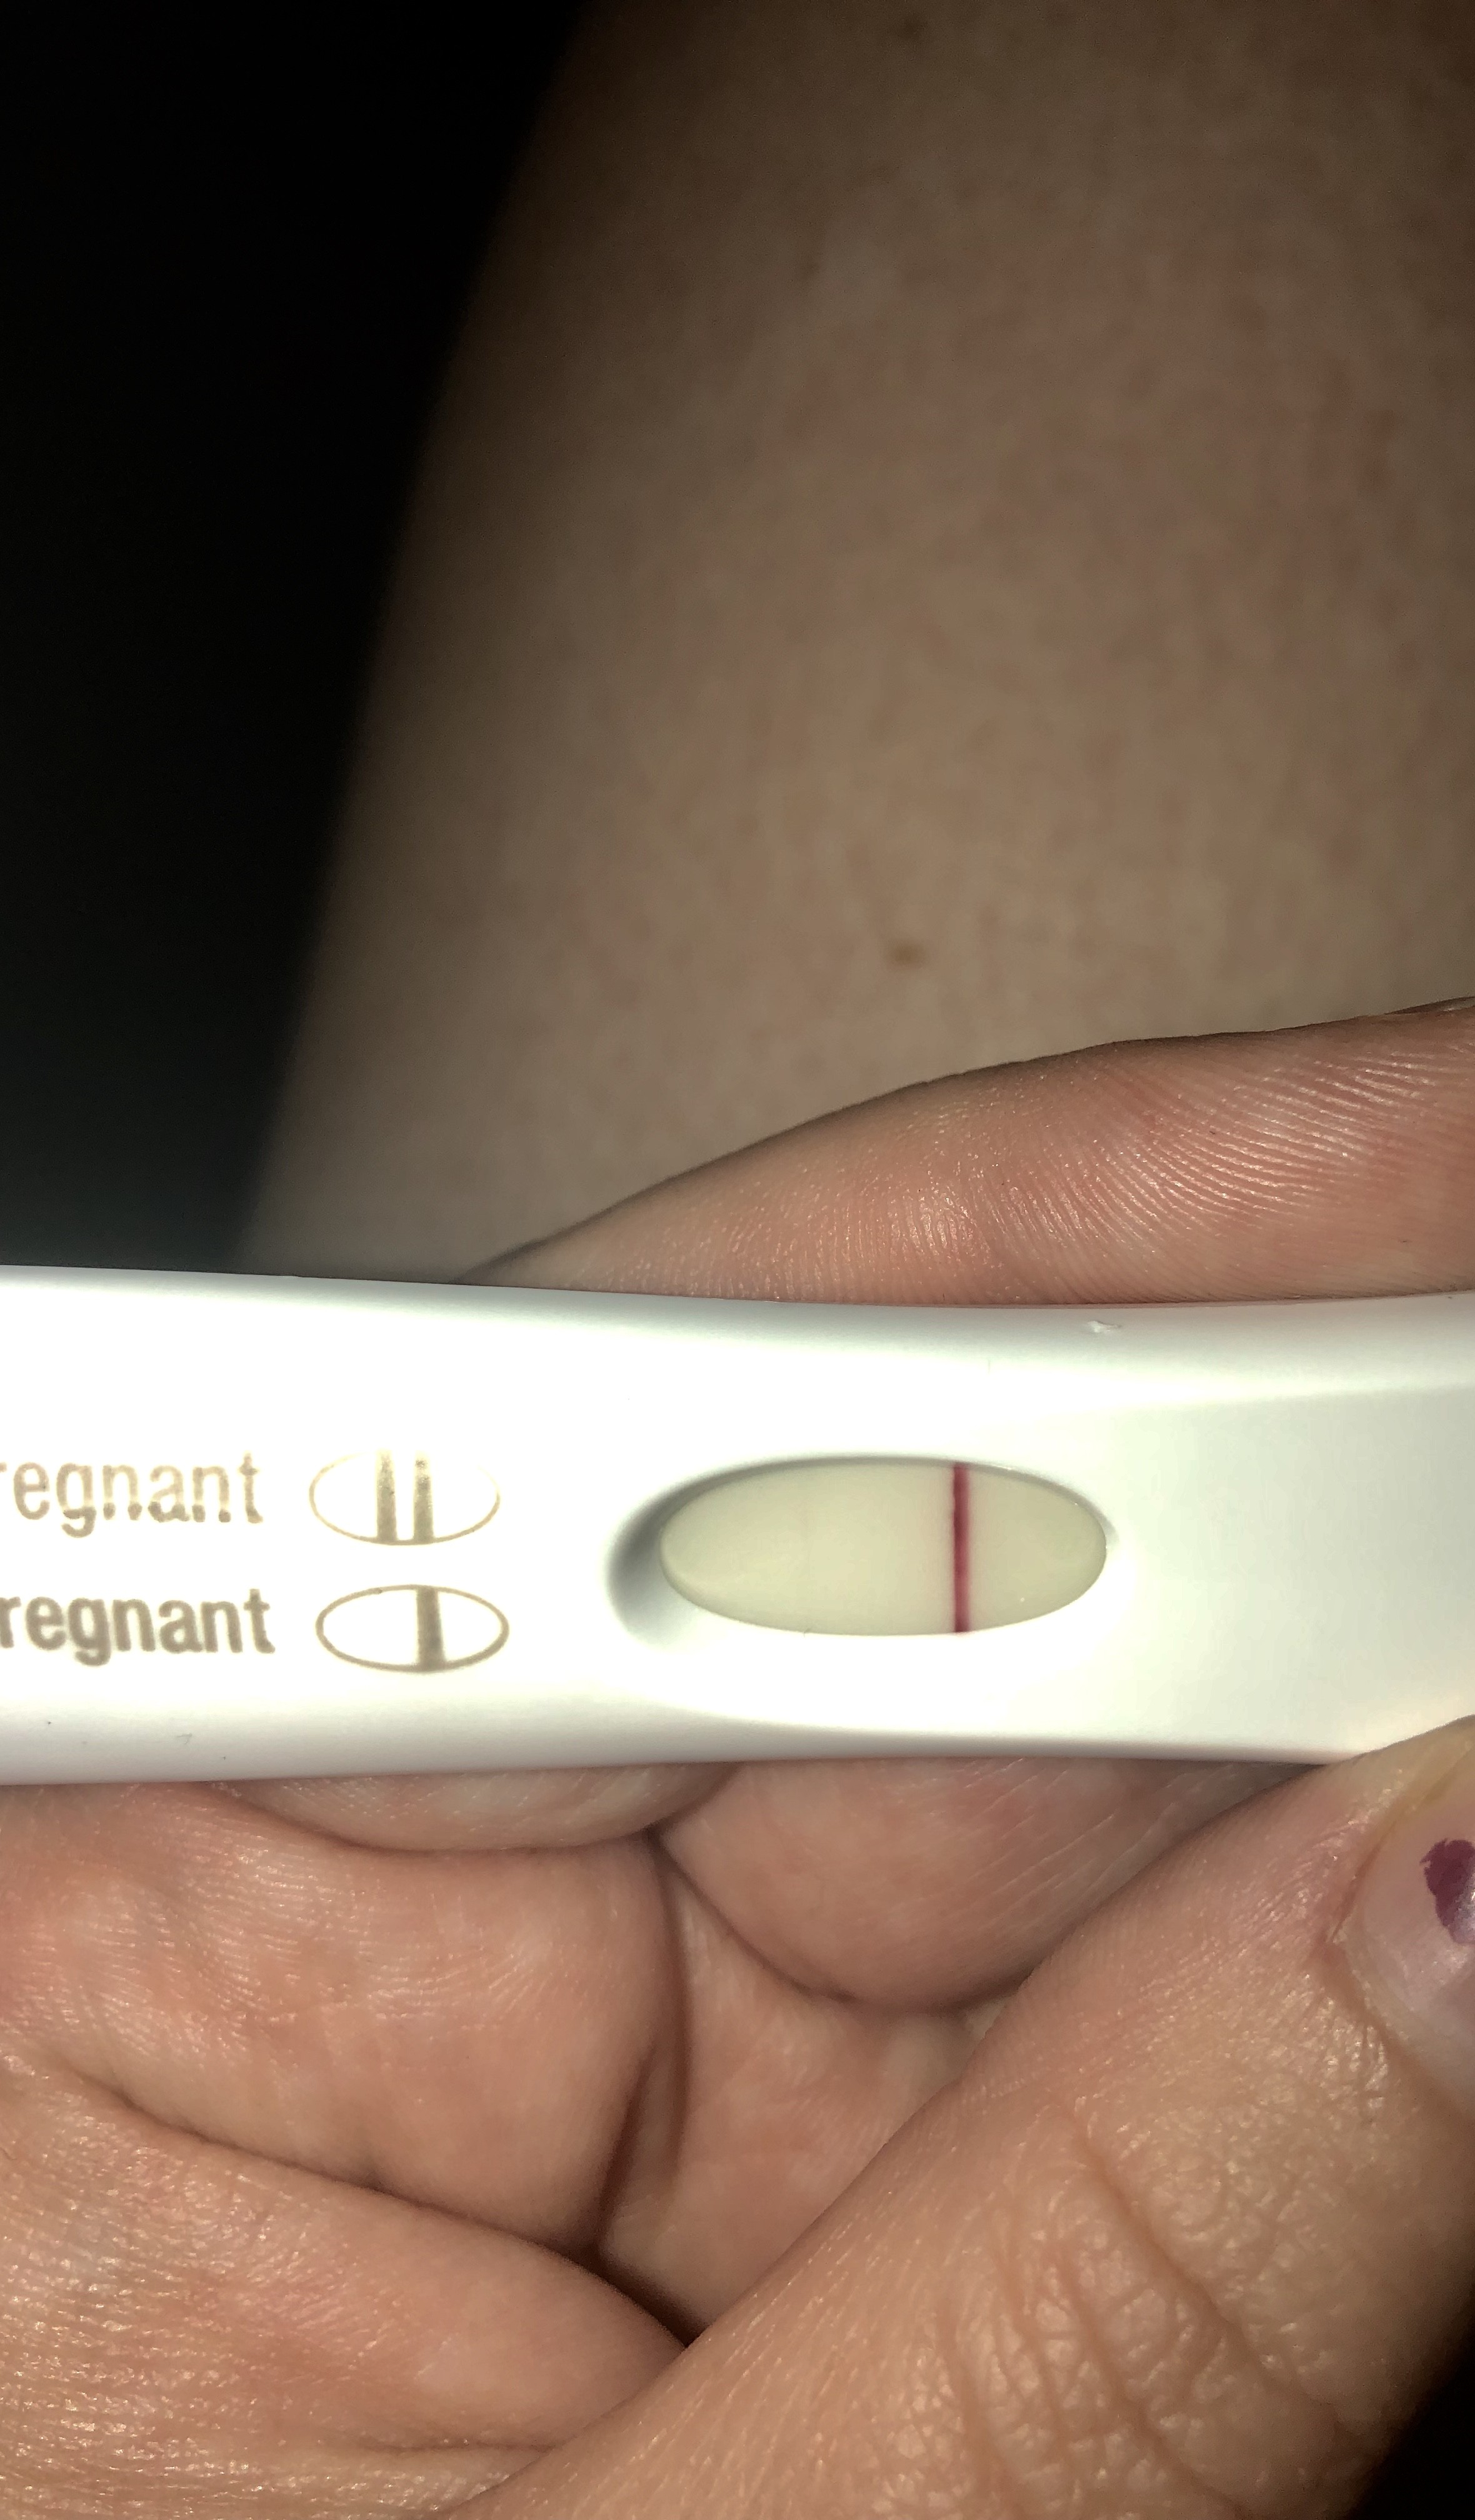 Download Pregnancy Test Positive Picture